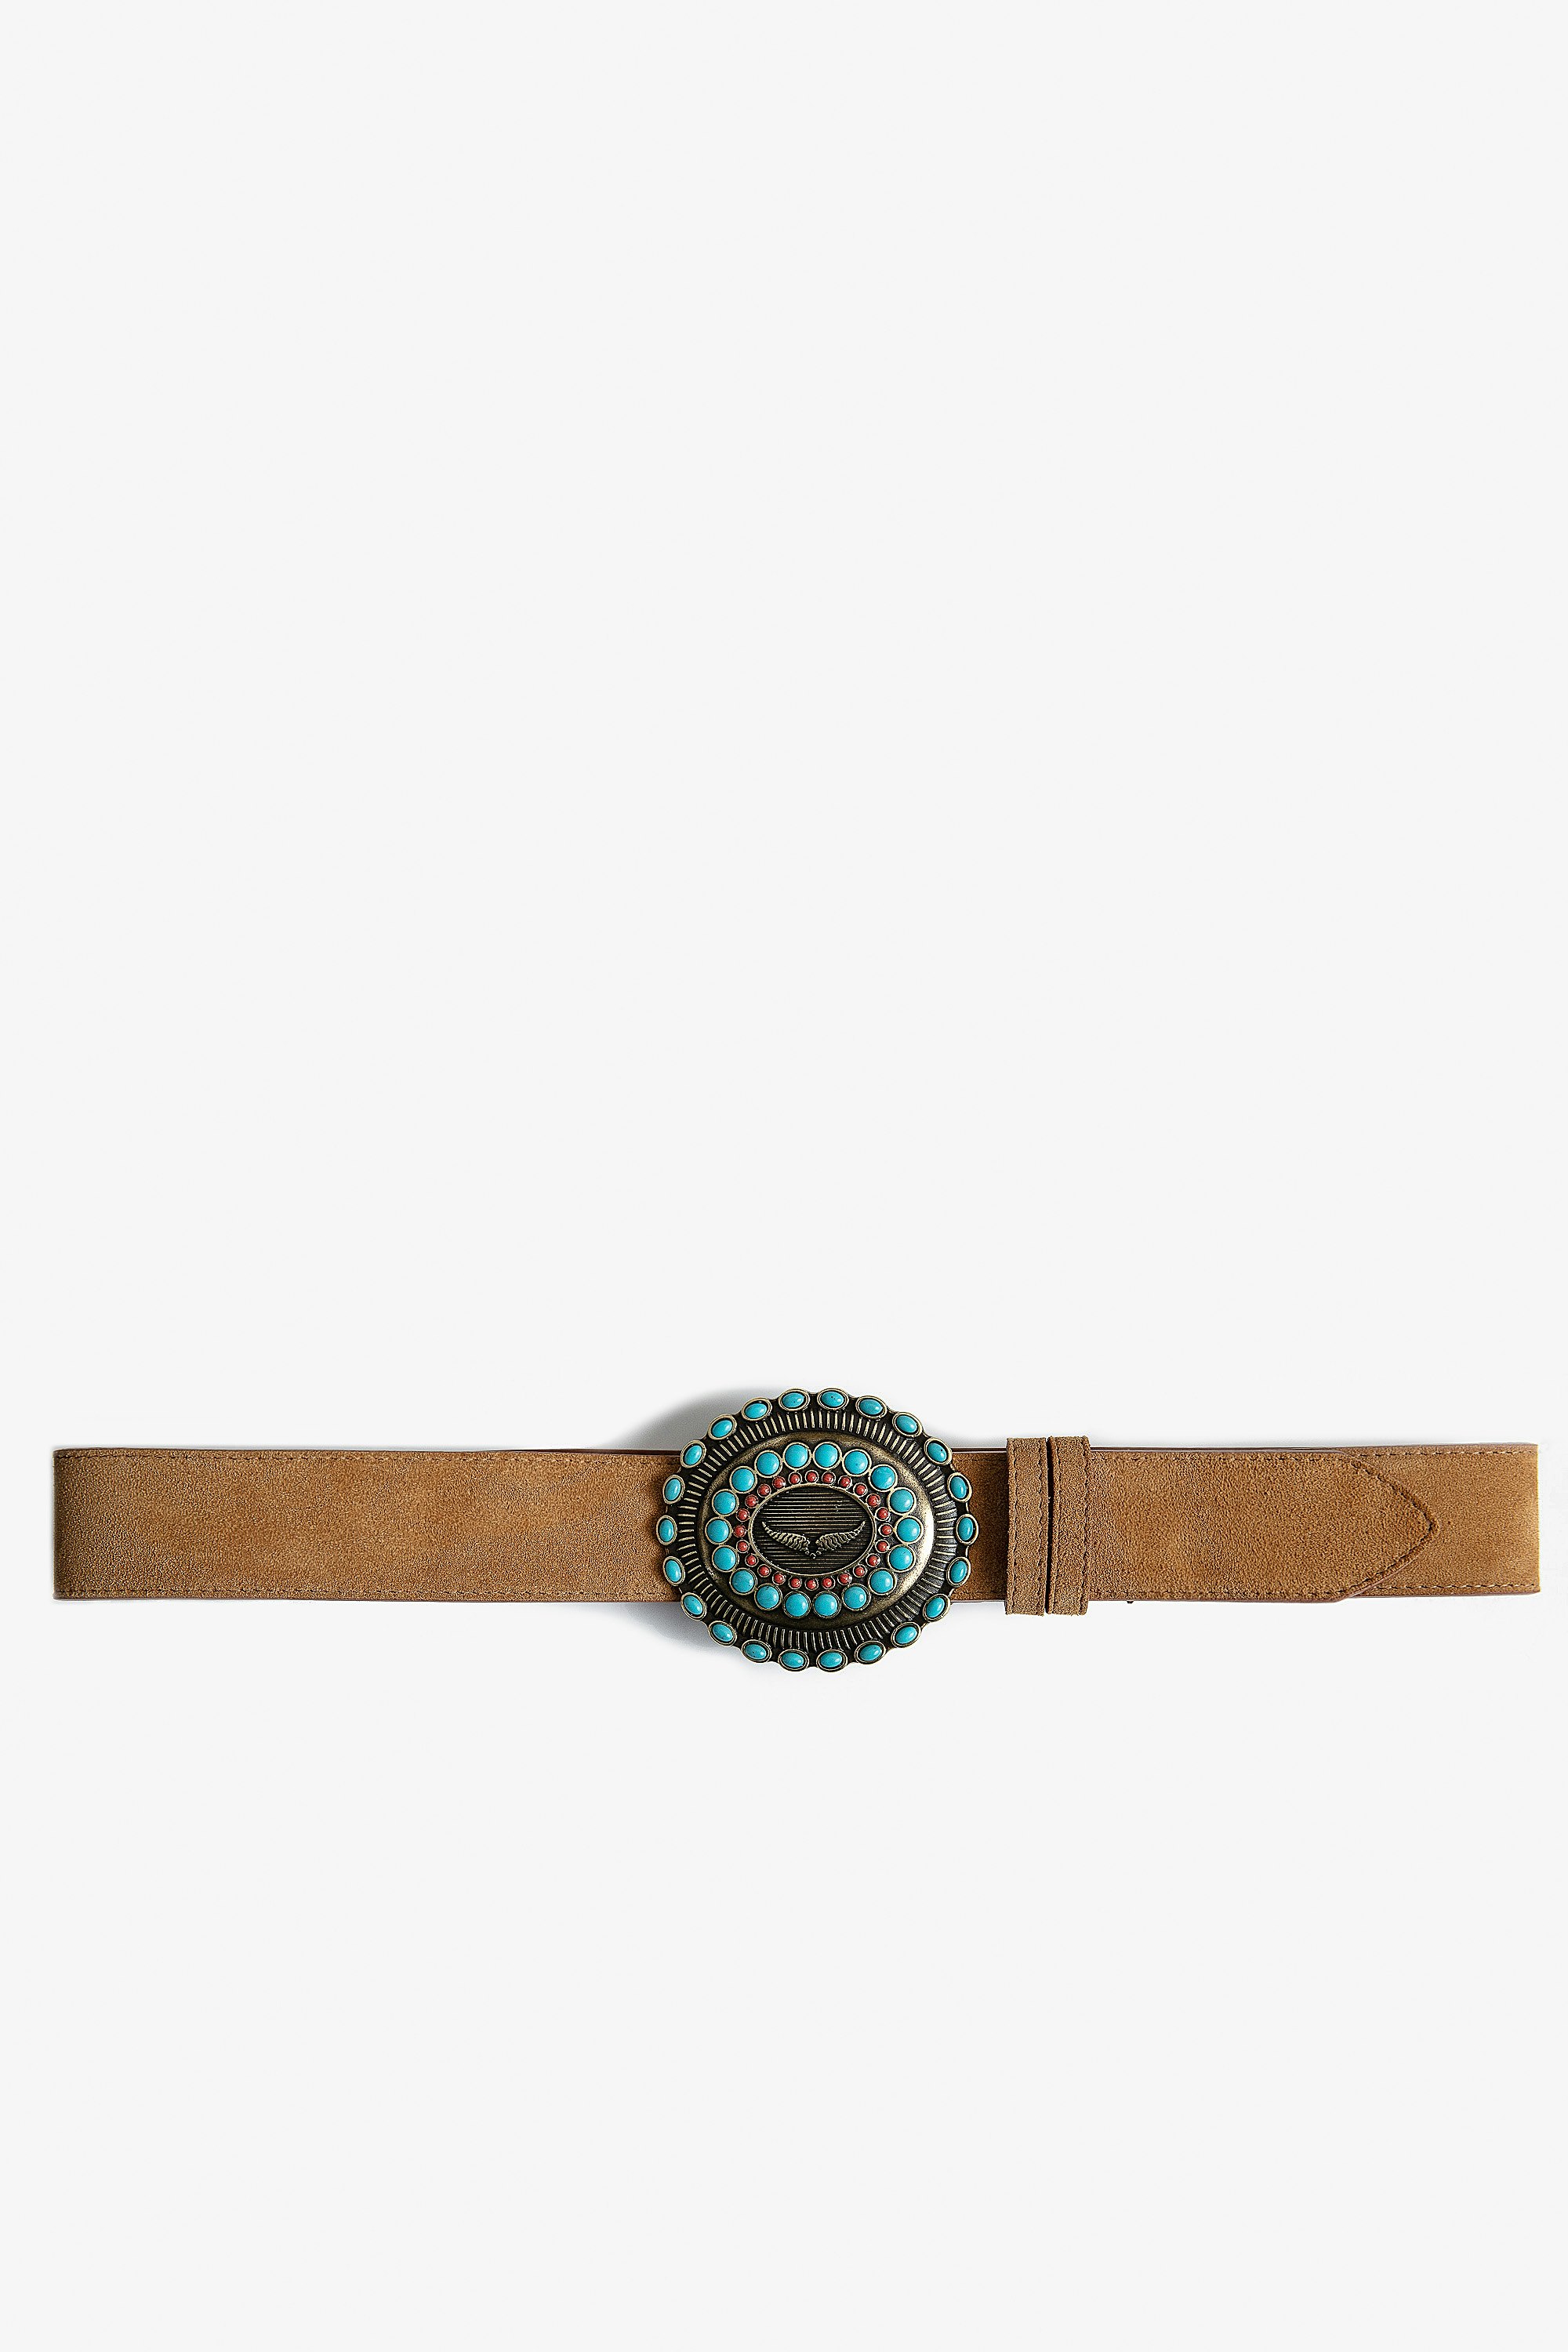 Santa Fe Belt Women’s belt in brown suede with jewel-studded buckle